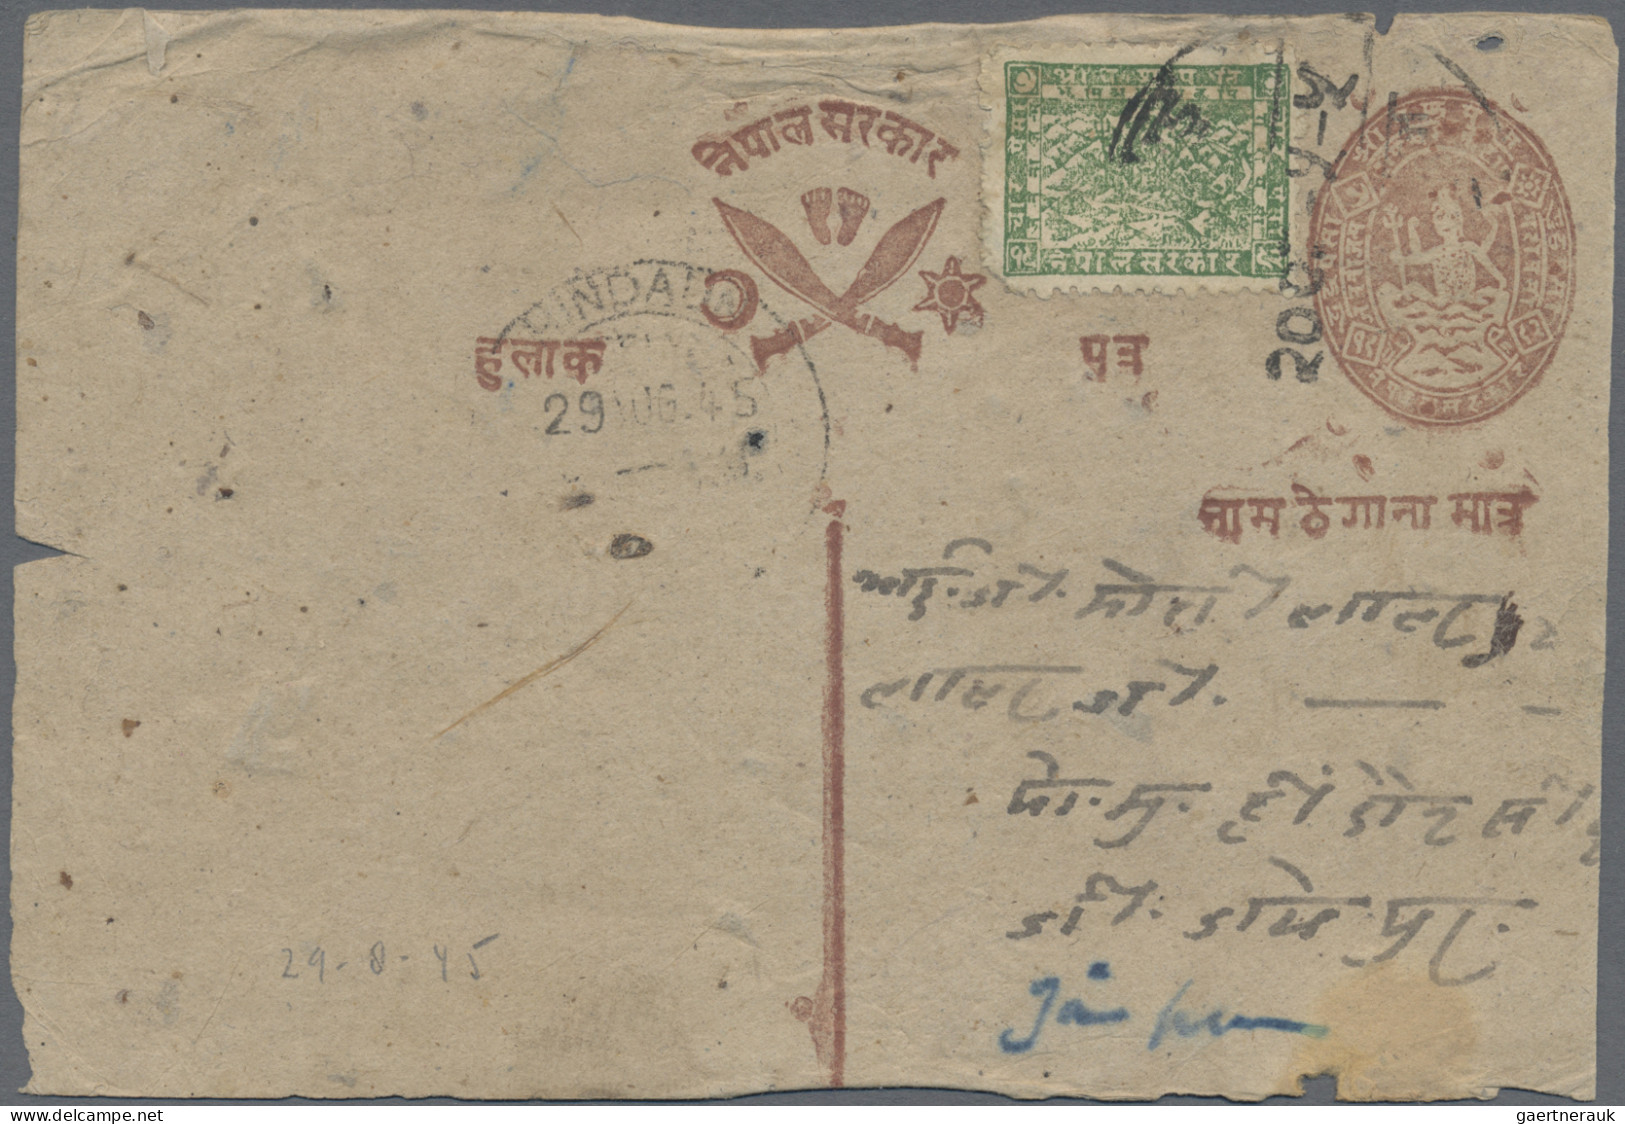 Nepal - postal stationery: 1880's-1980's: Collection of 58 postal stationery car